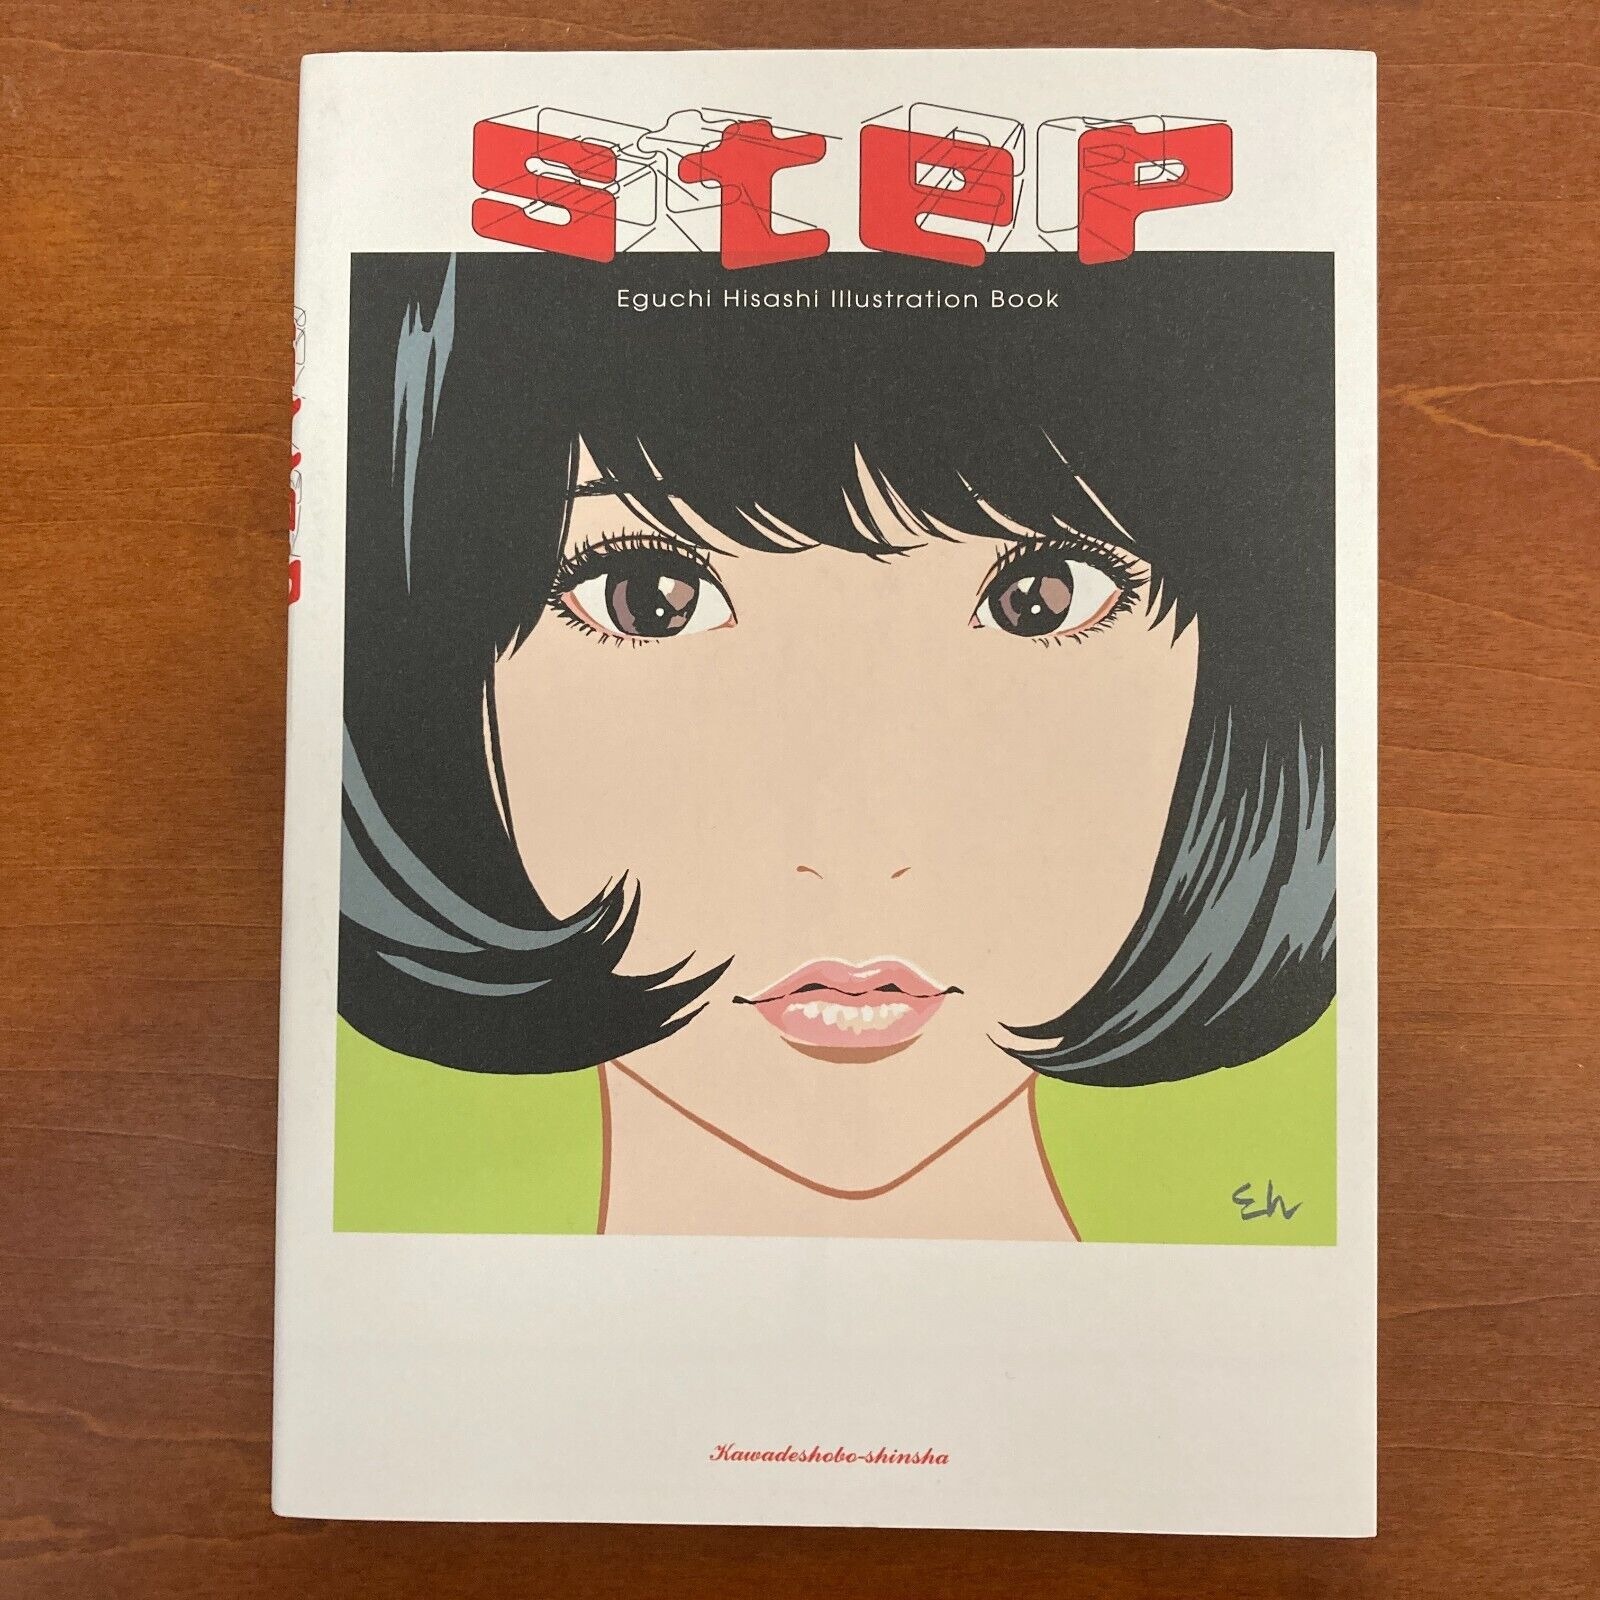 step Hisashi Eguchi Illustration Book Art Book City Pop